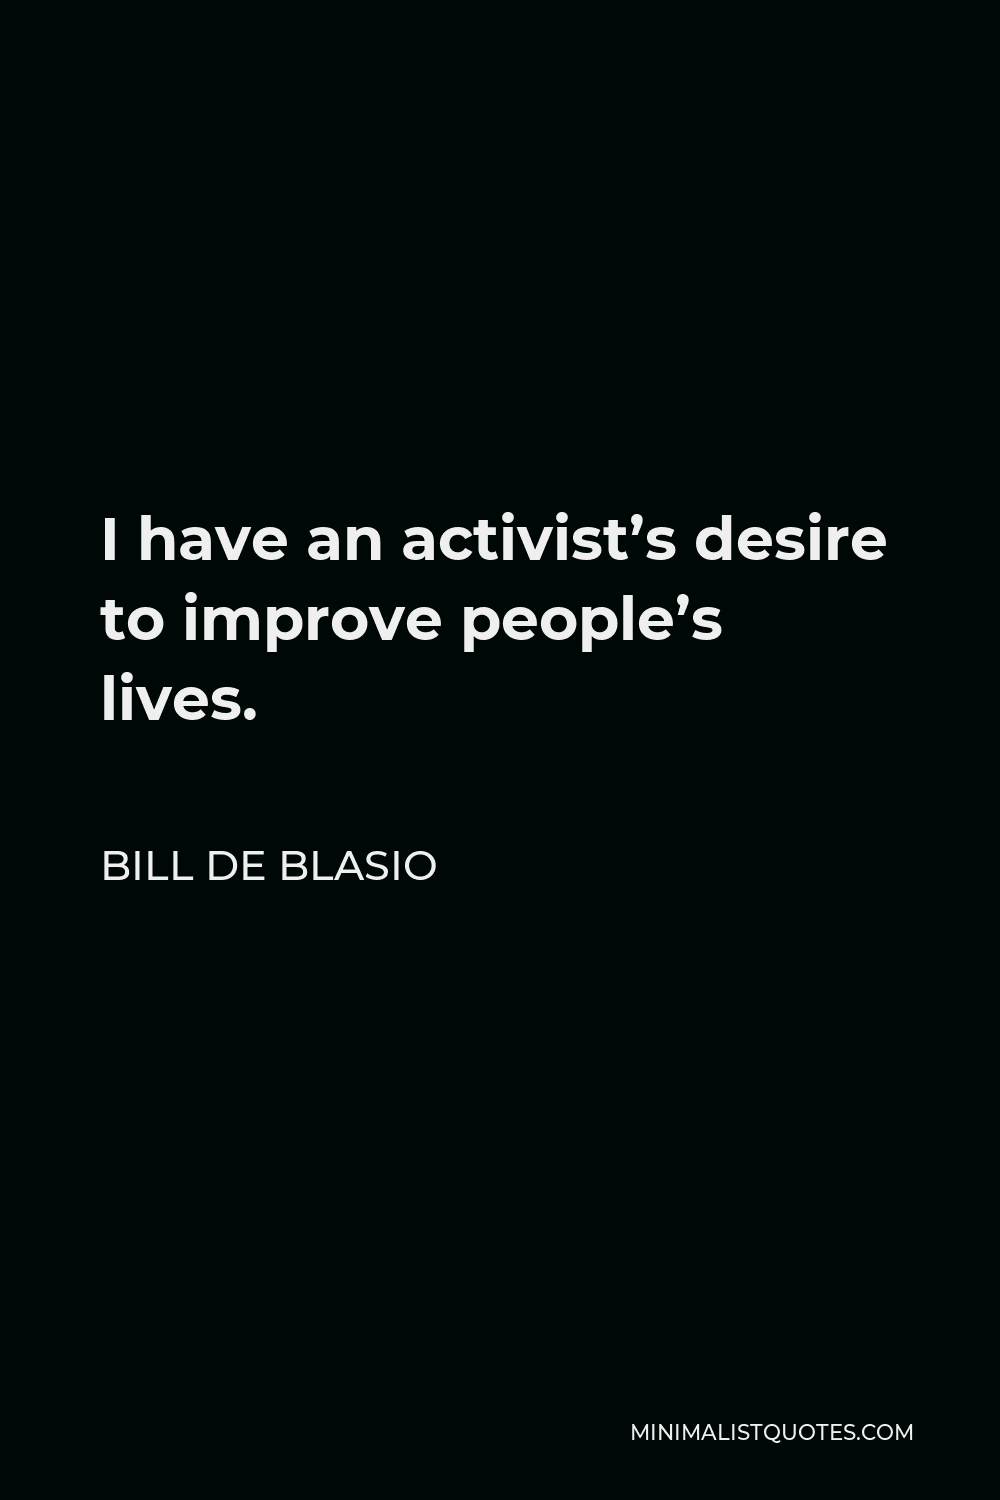 Bill de Blasio Quote - I have an activist’s desire to improve people’s lives.